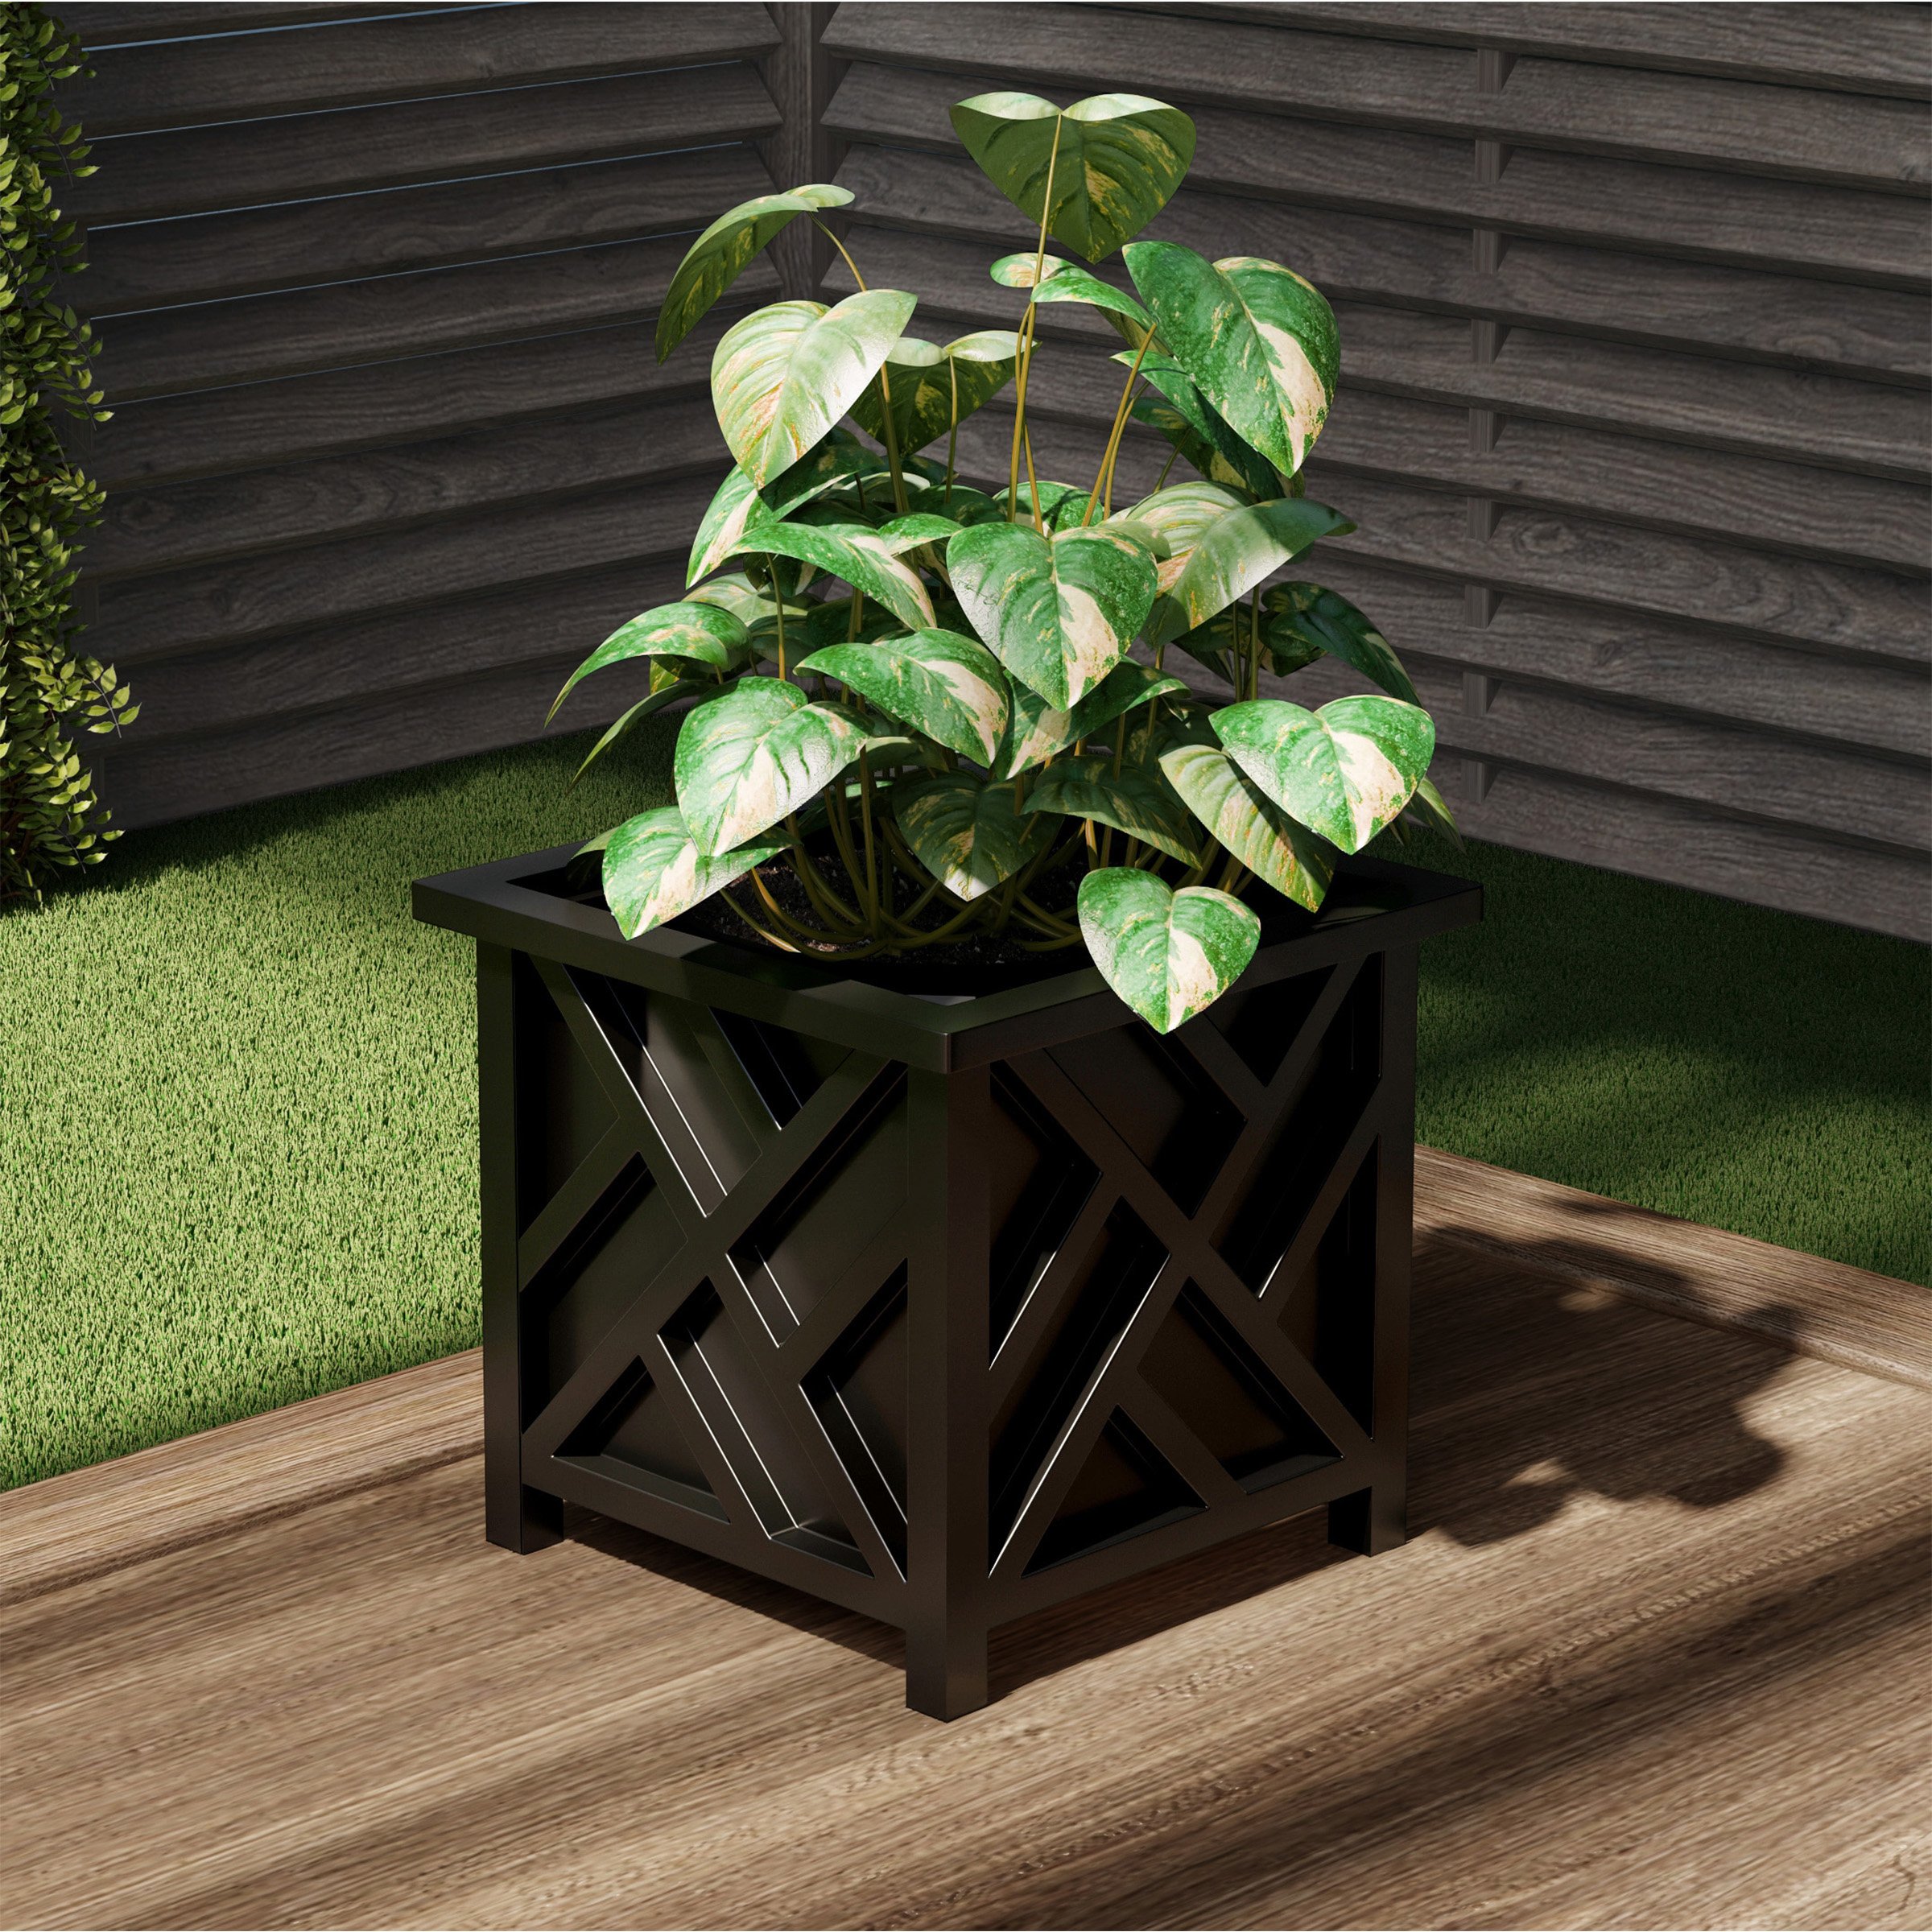 Square Planter Box- Black Lattice Container For Flowers & Plants Bottom Insert Holds Soil Outdoor Pot For Garden Patio - Terracotta